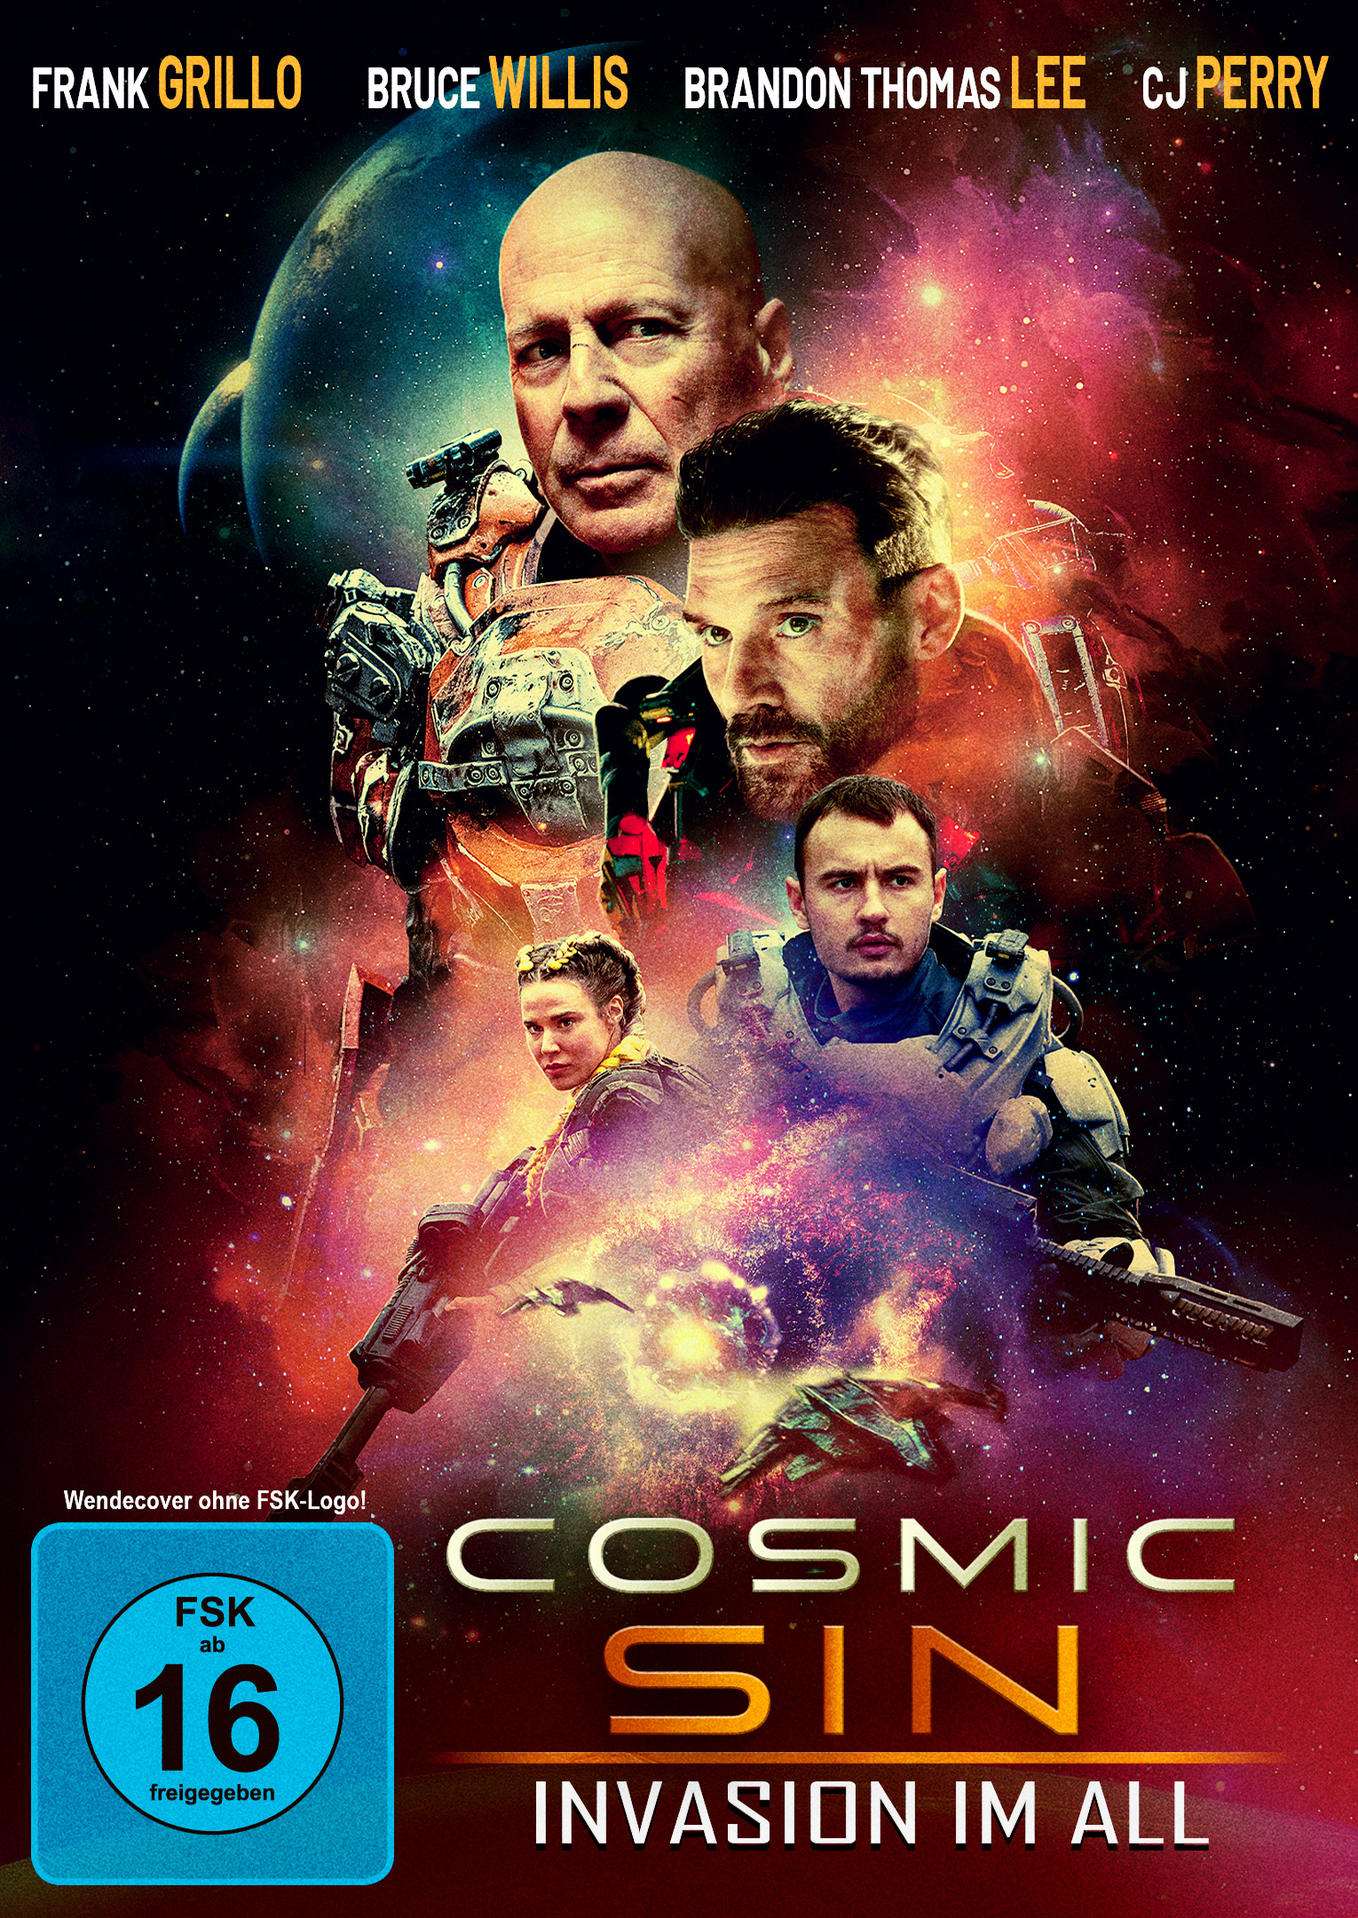 Cosmic Sin - DVD All im Invasion